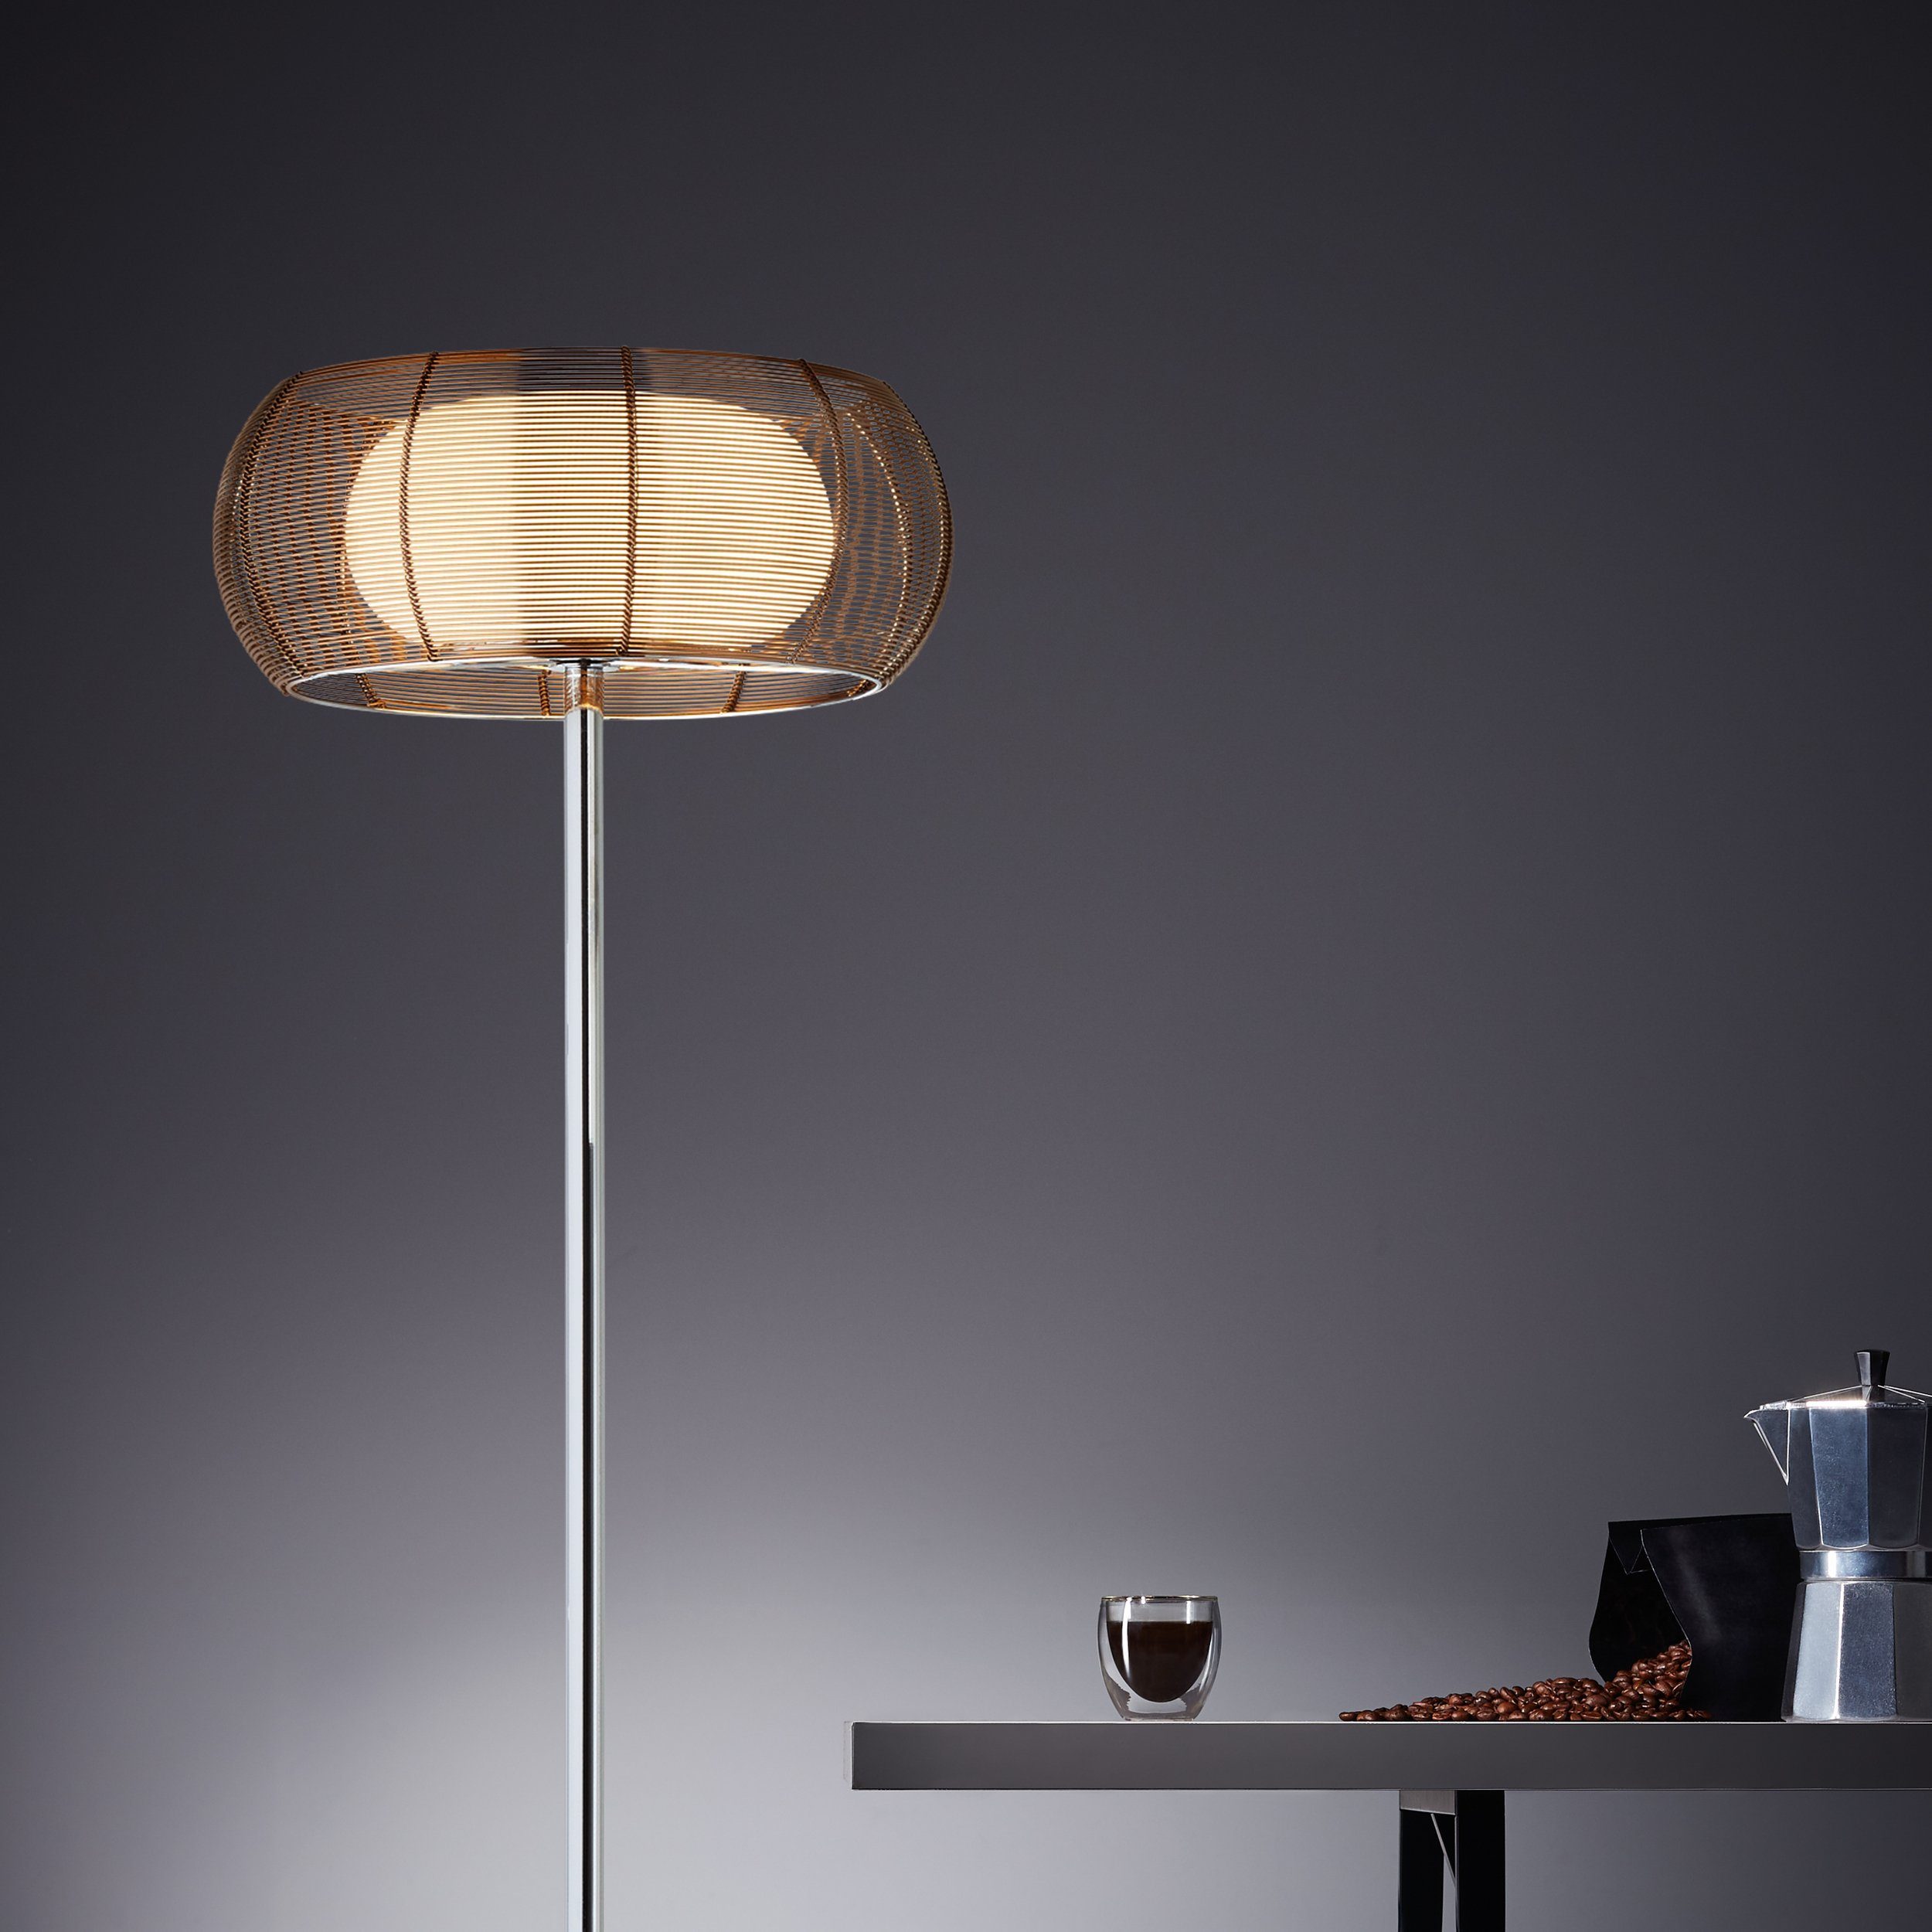 Lightbox Stehlampe, ohne Leuchtmittel, Stehlampe, 162 cm Höhe, Ø 43 cm, 2 x E27, max. 30 W, bronze/chrom